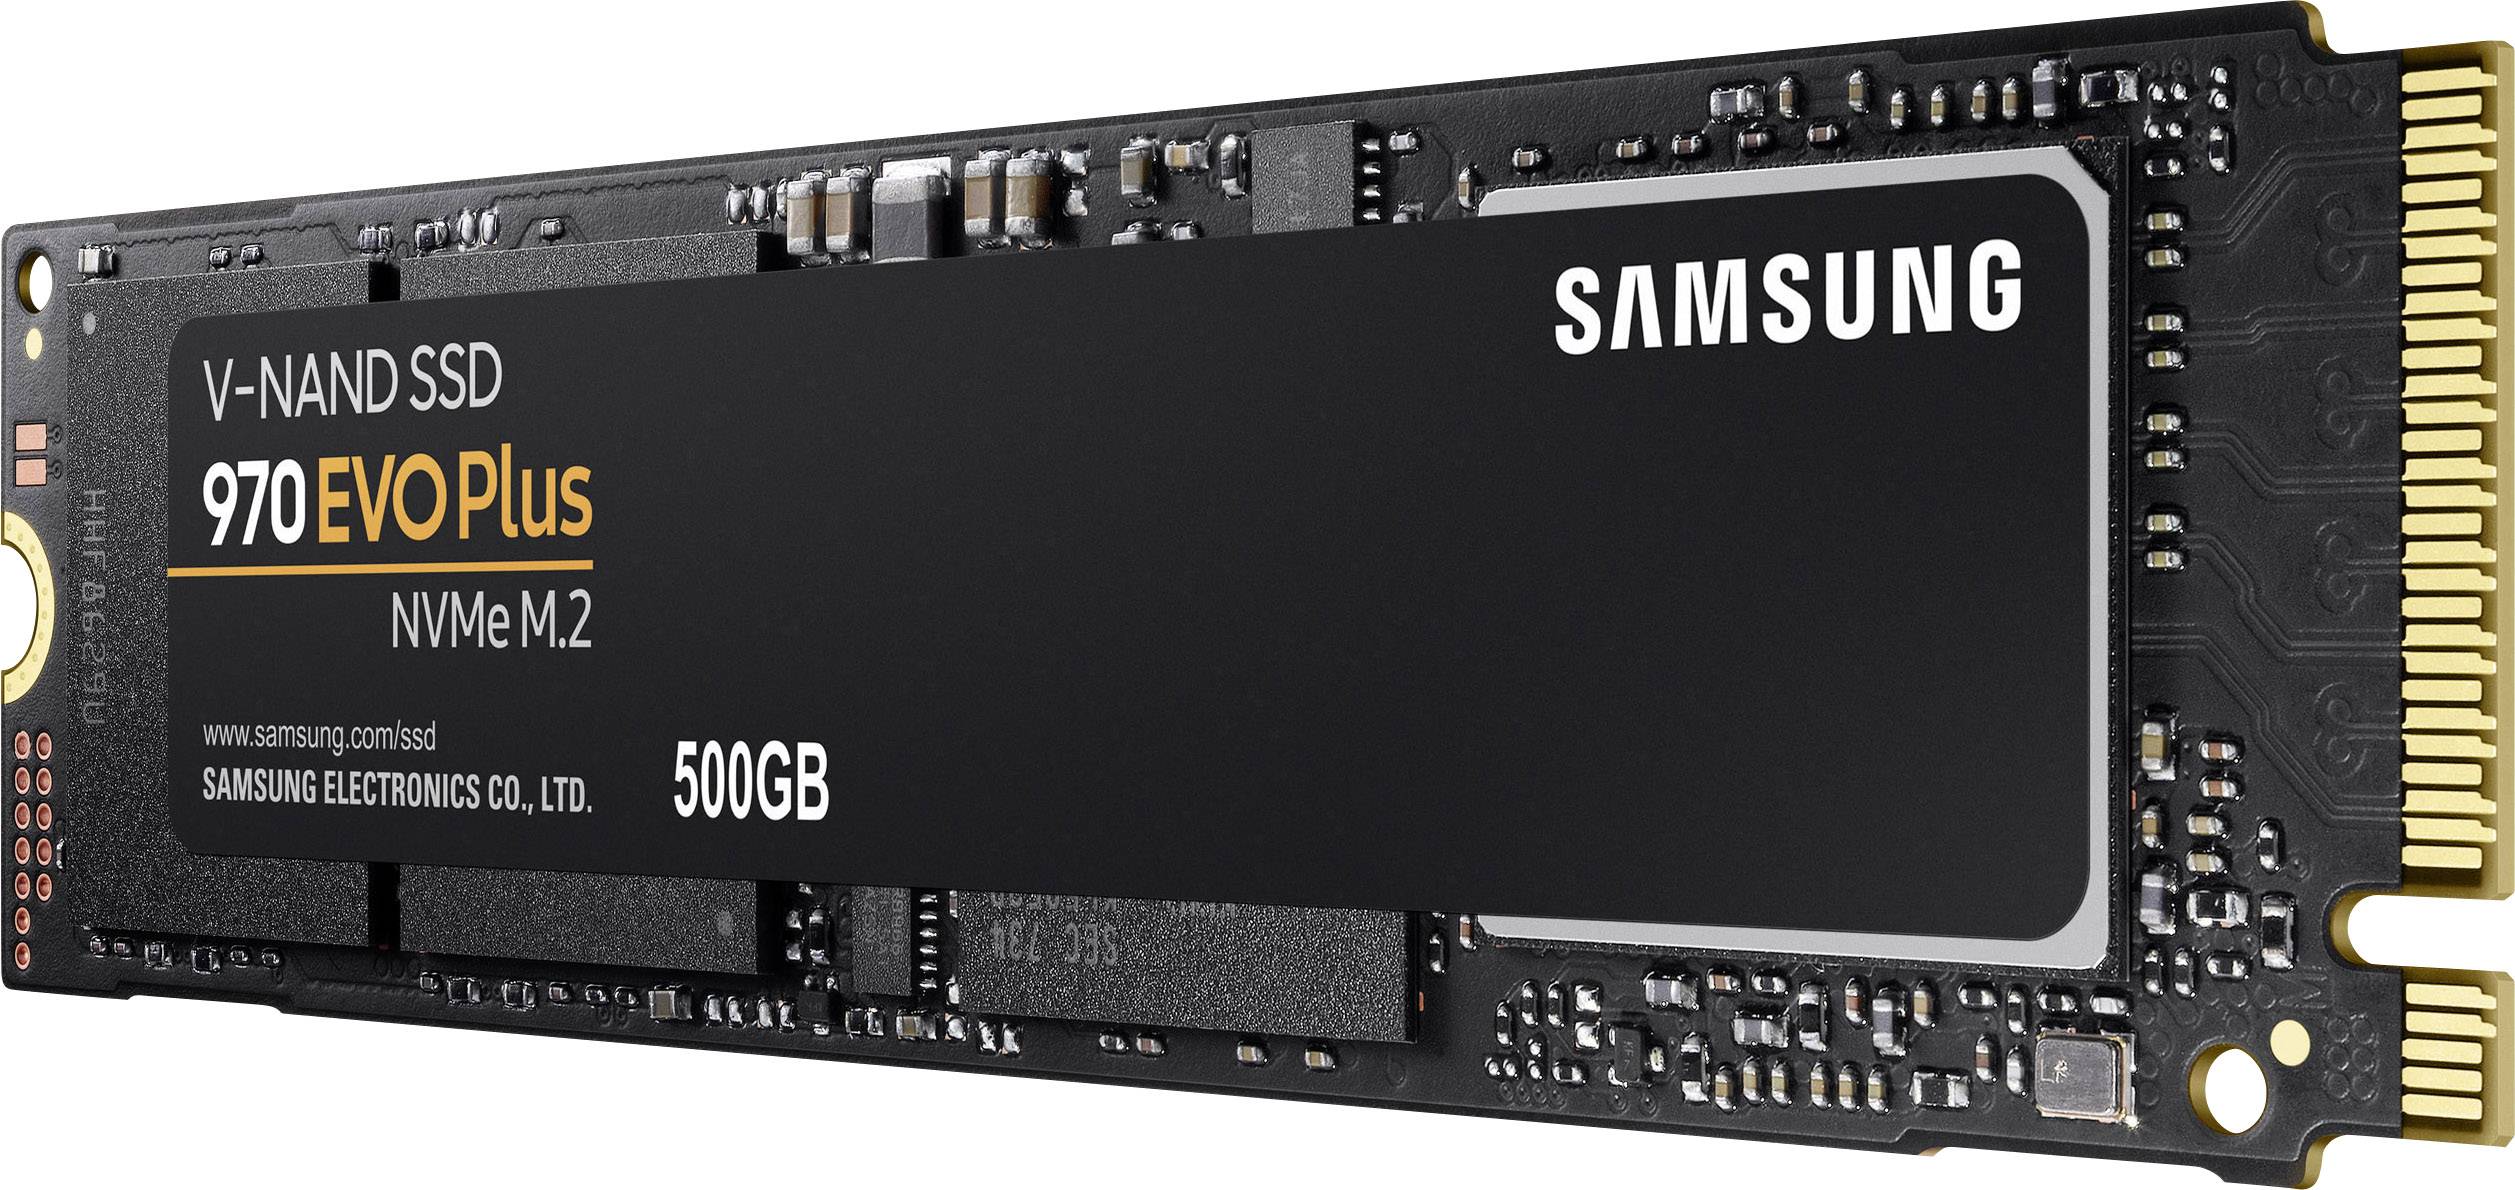 grill Dekan kaos Samsung 970 EVO Plus 500 GB Intern NVMe/PCIe M.2 SSD M.2 NVMe PCIe 3.0 x 4  Retail MZ-V7S500BW | Conradelektronik.dk